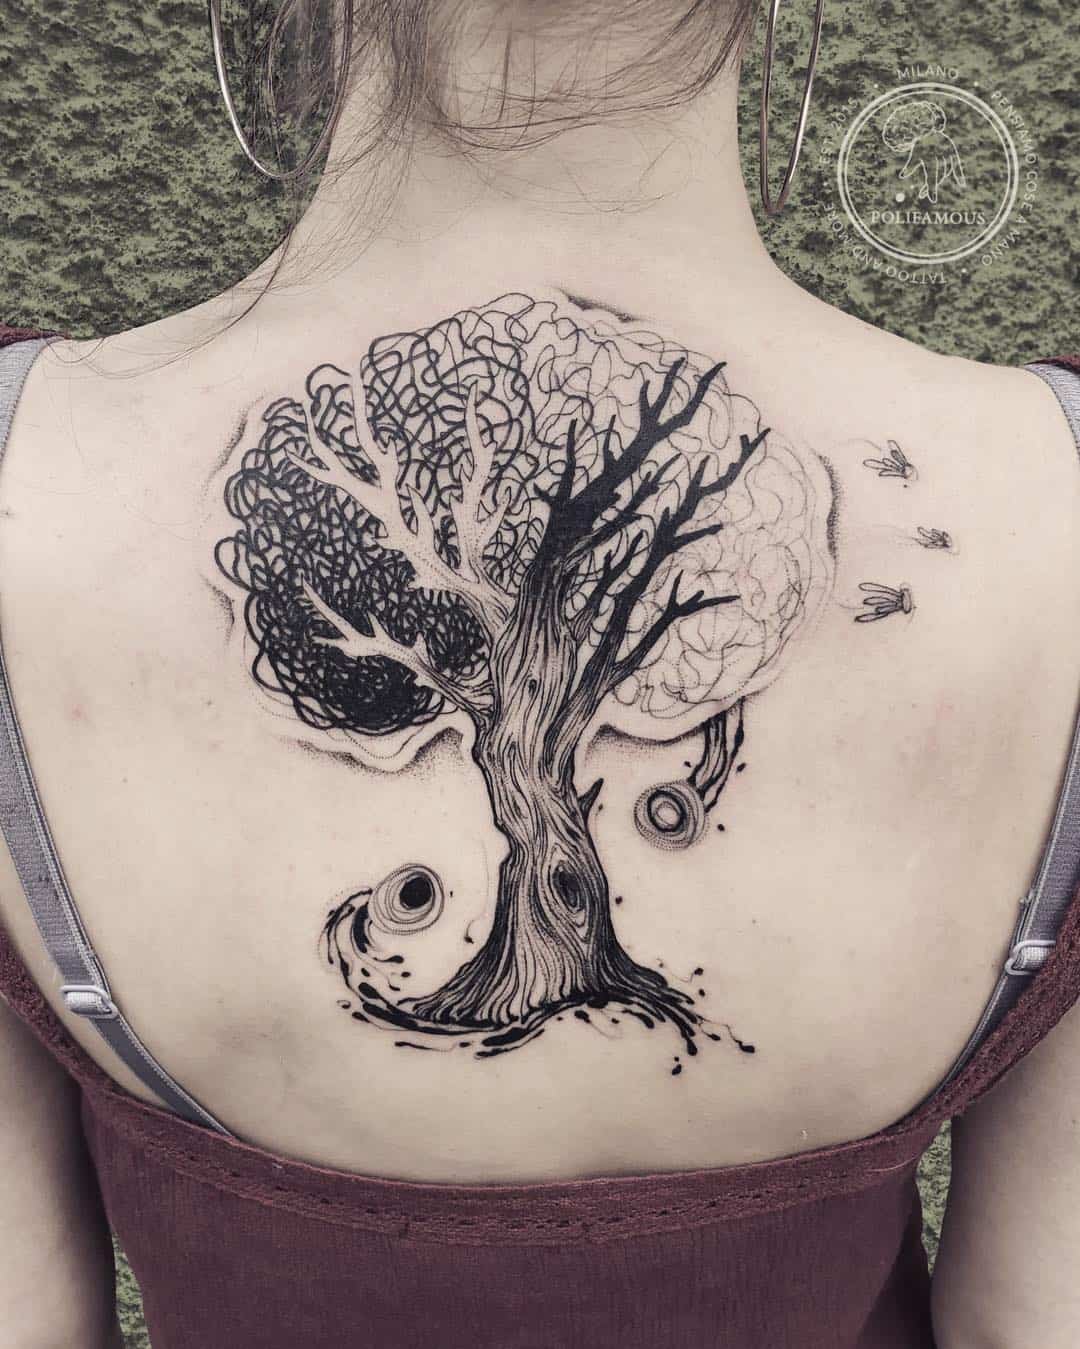 tatuaggio albero